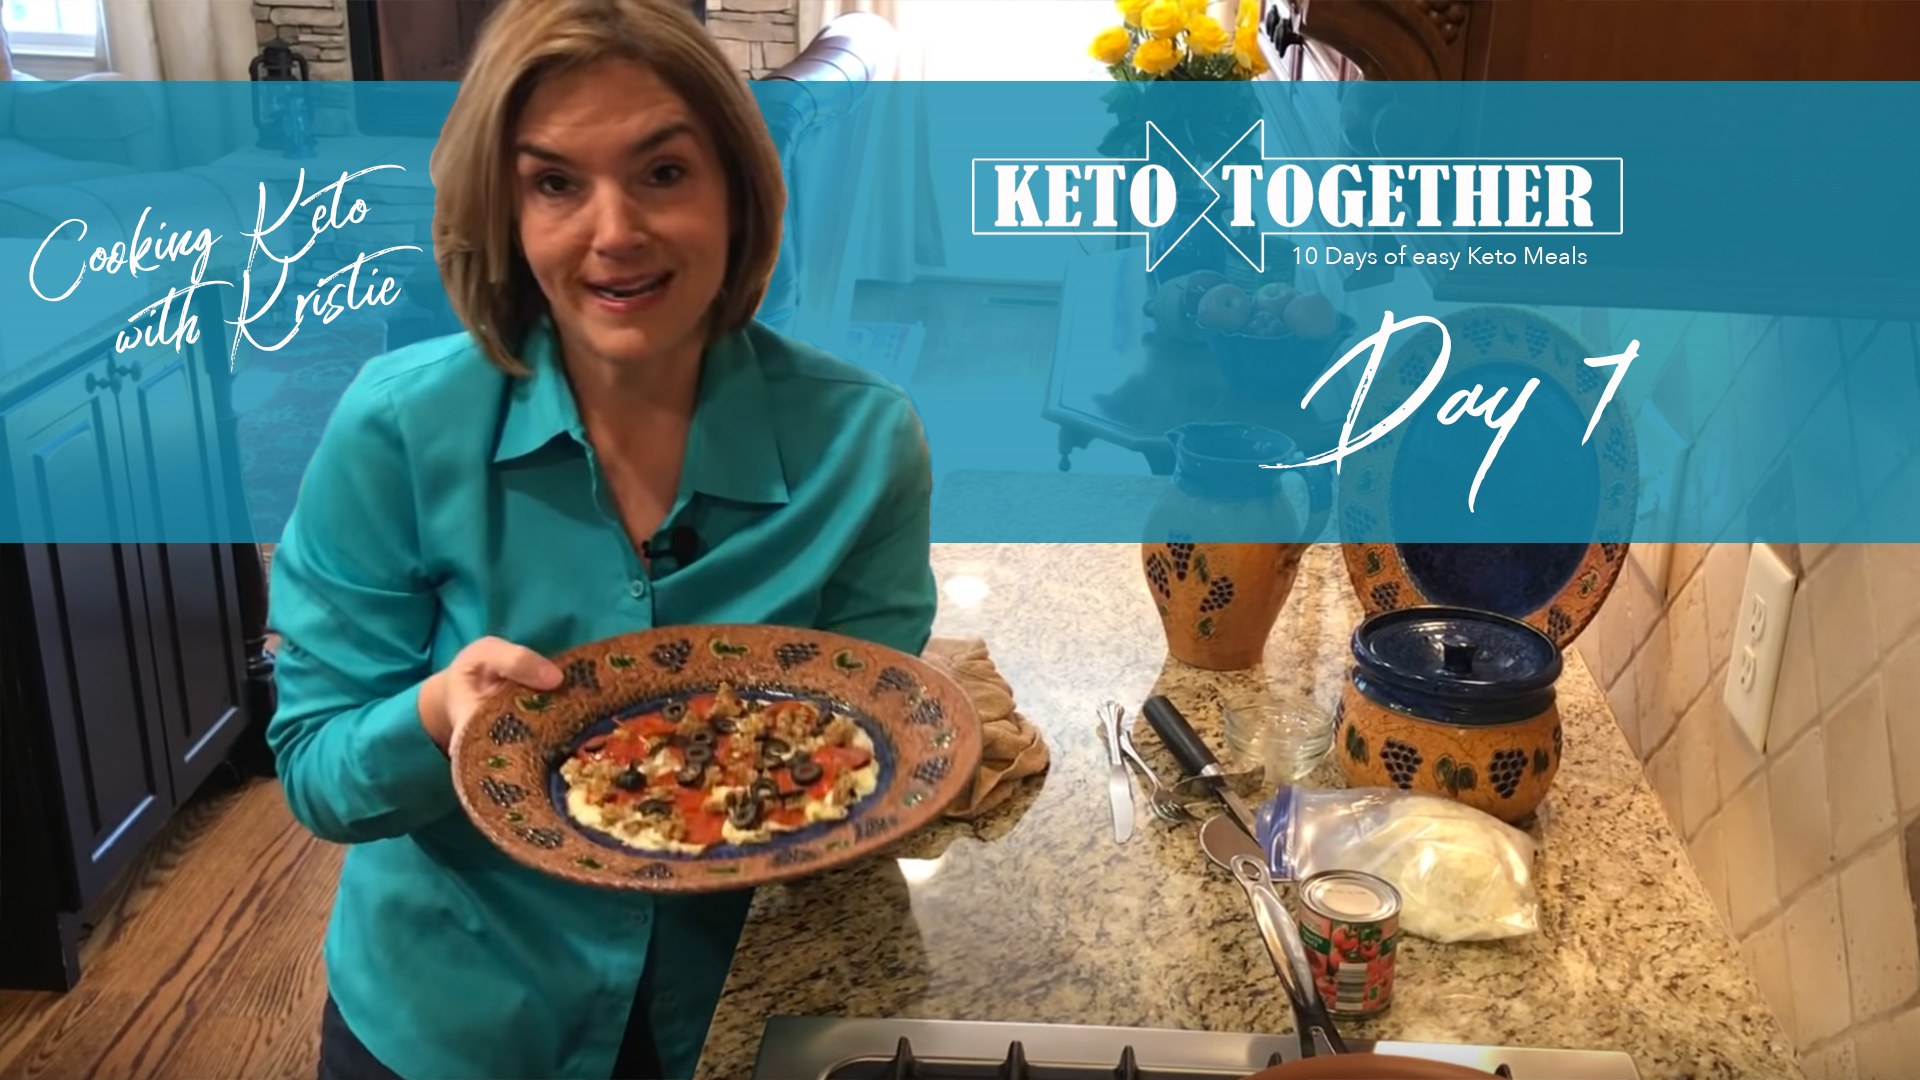 keto together pizza